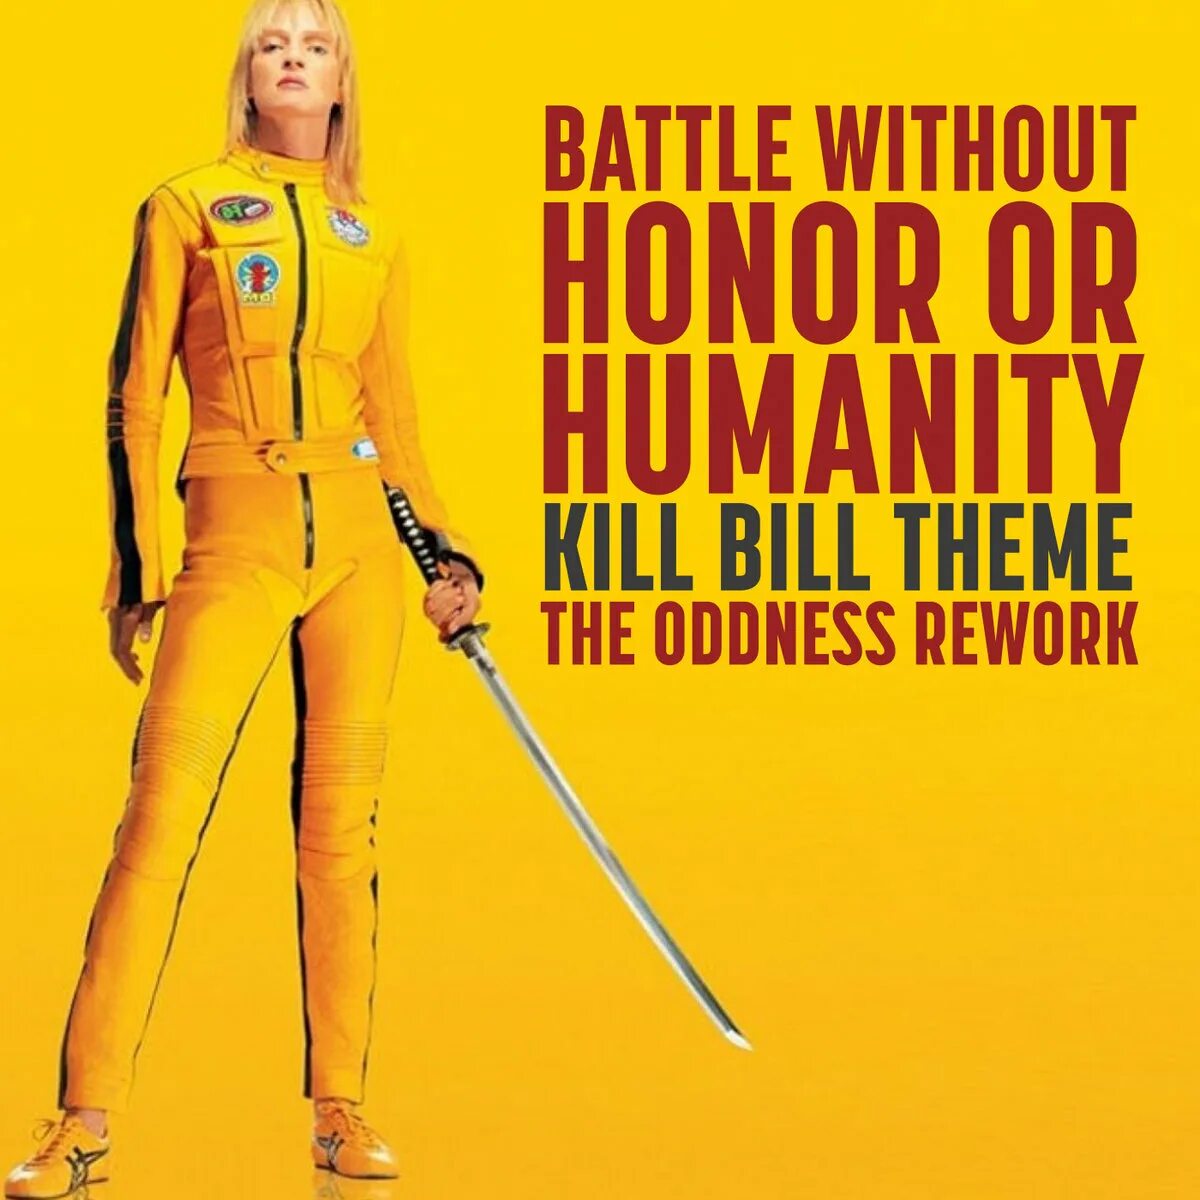 Battle without Honor or Humanity. Tomoyasu Hotei Battle without Honor or Humanity. Kill Bill Battle without Honor or Humanity. Kill Bill the oddness Rework Battle without Honor or Humanity.